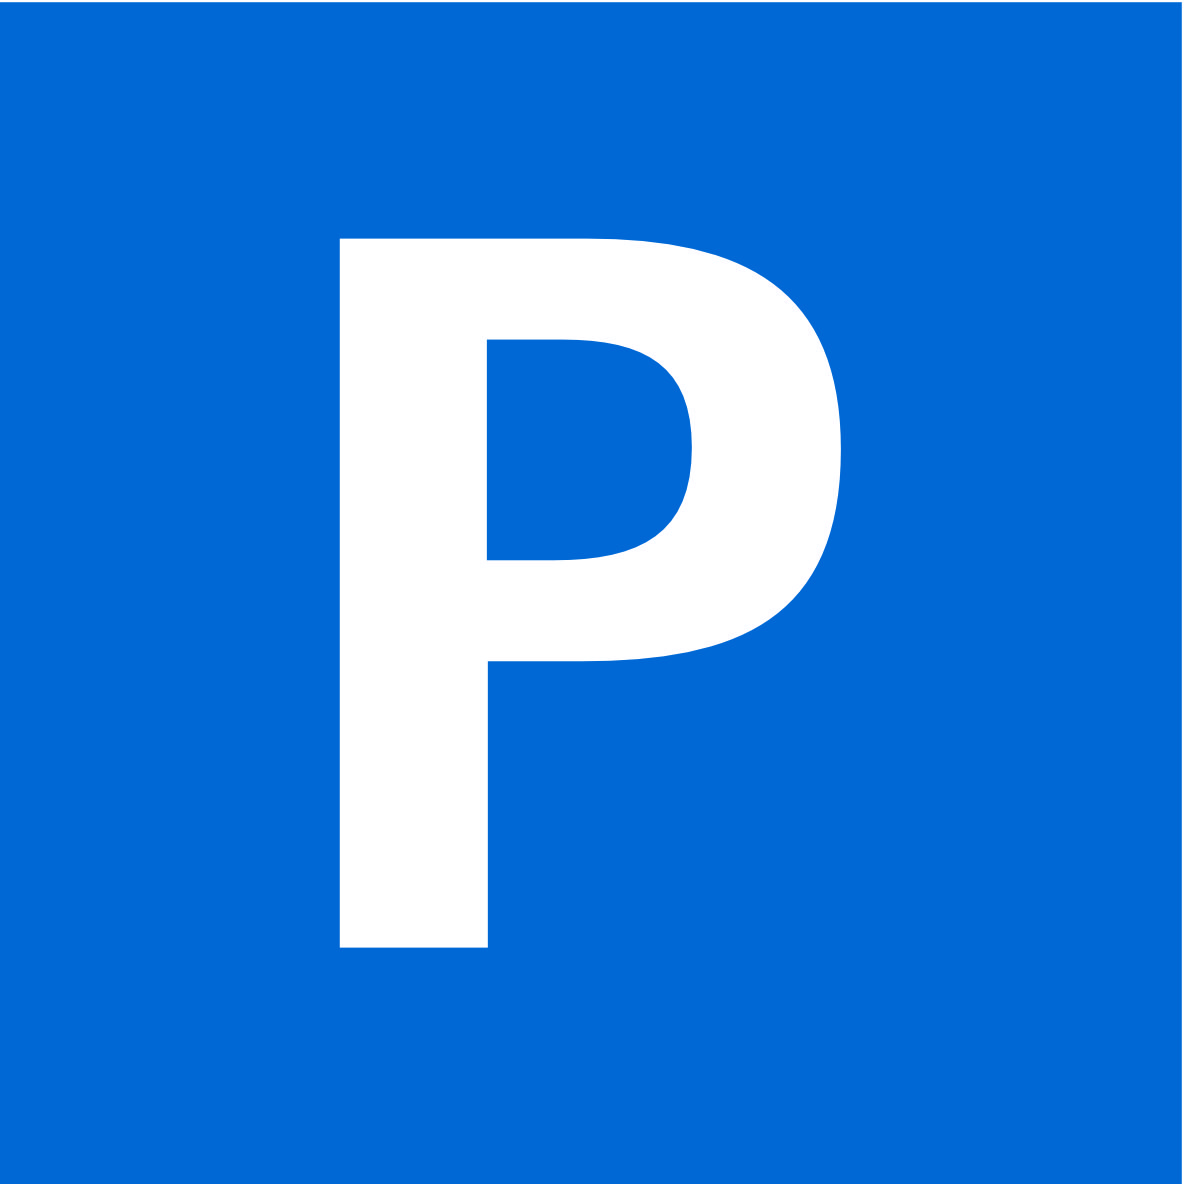 Parken-Symbol